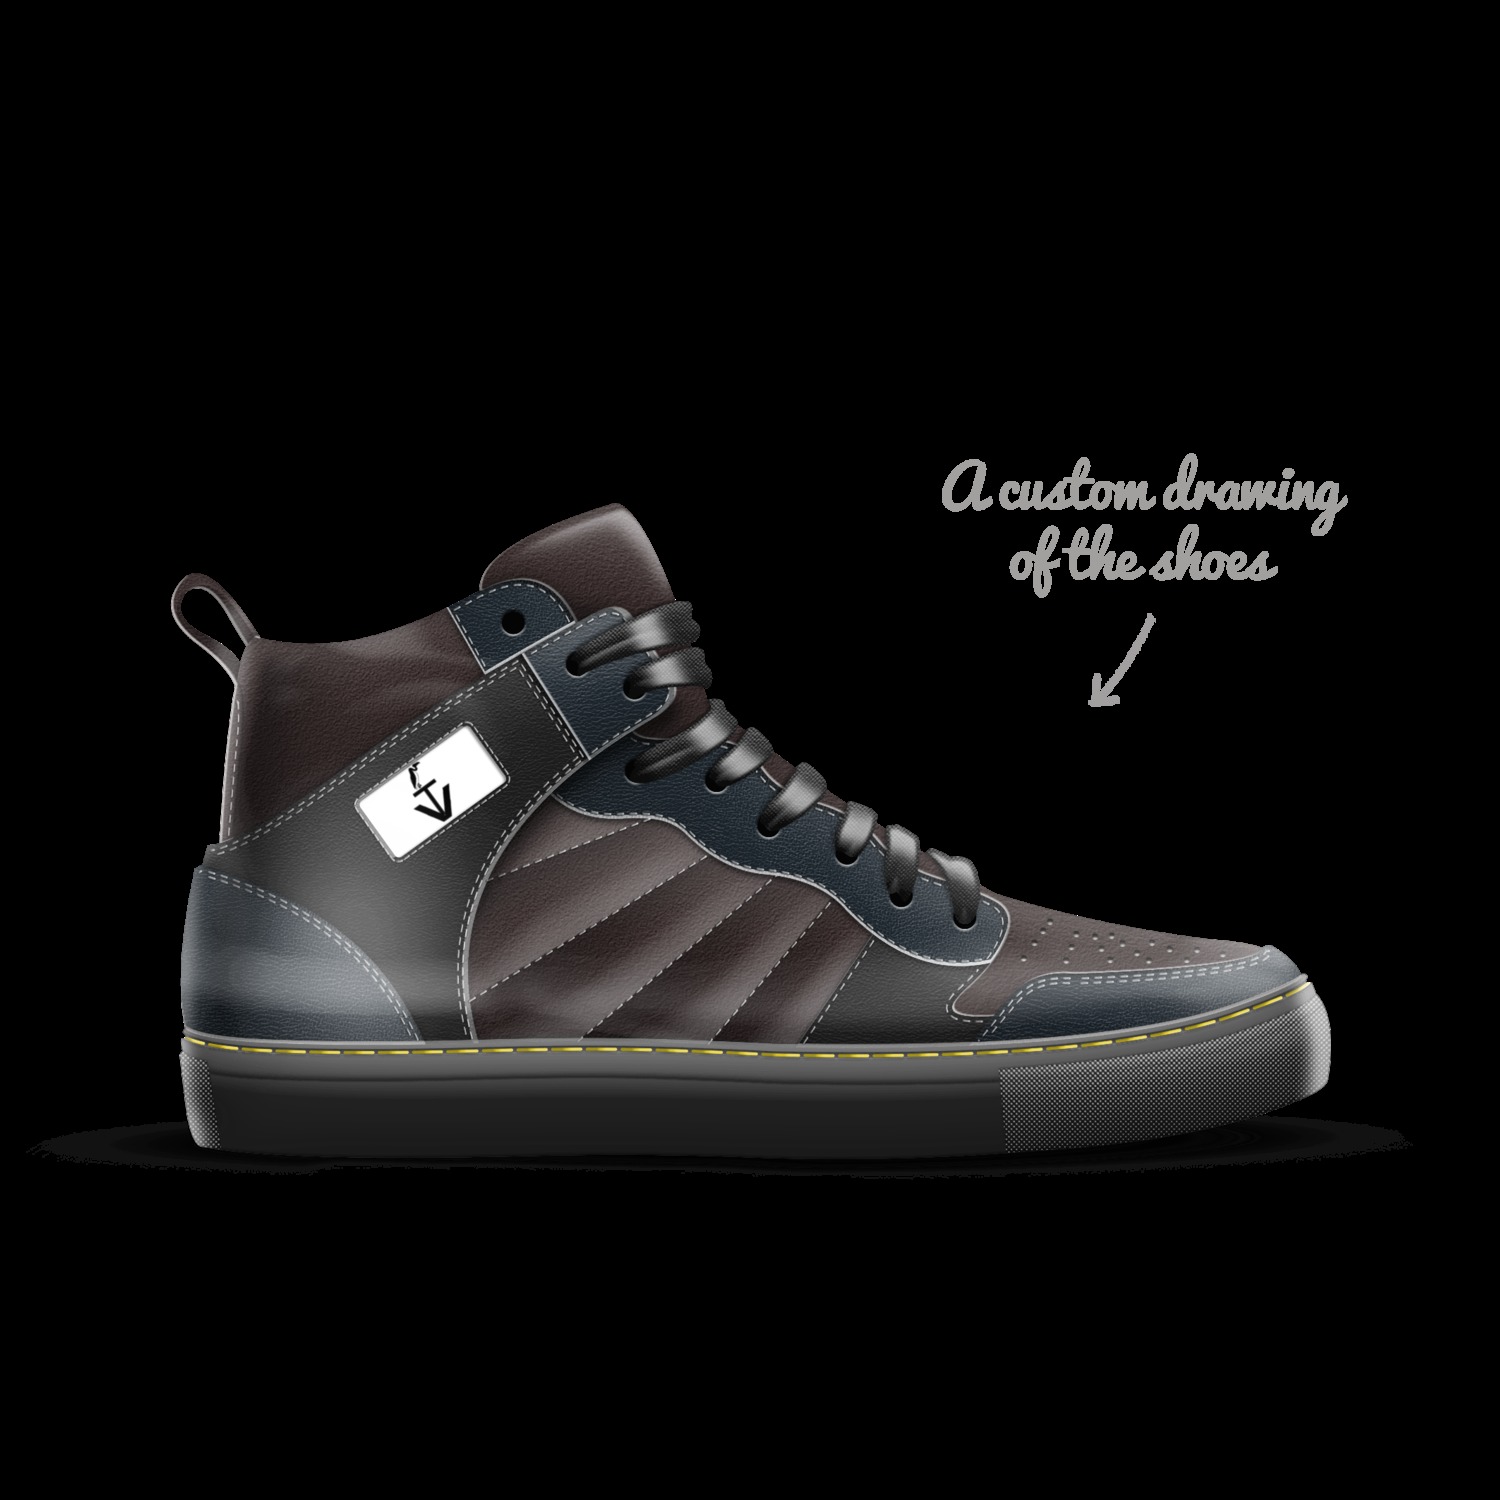 vulture | A Custom Shoe concept by Arid 